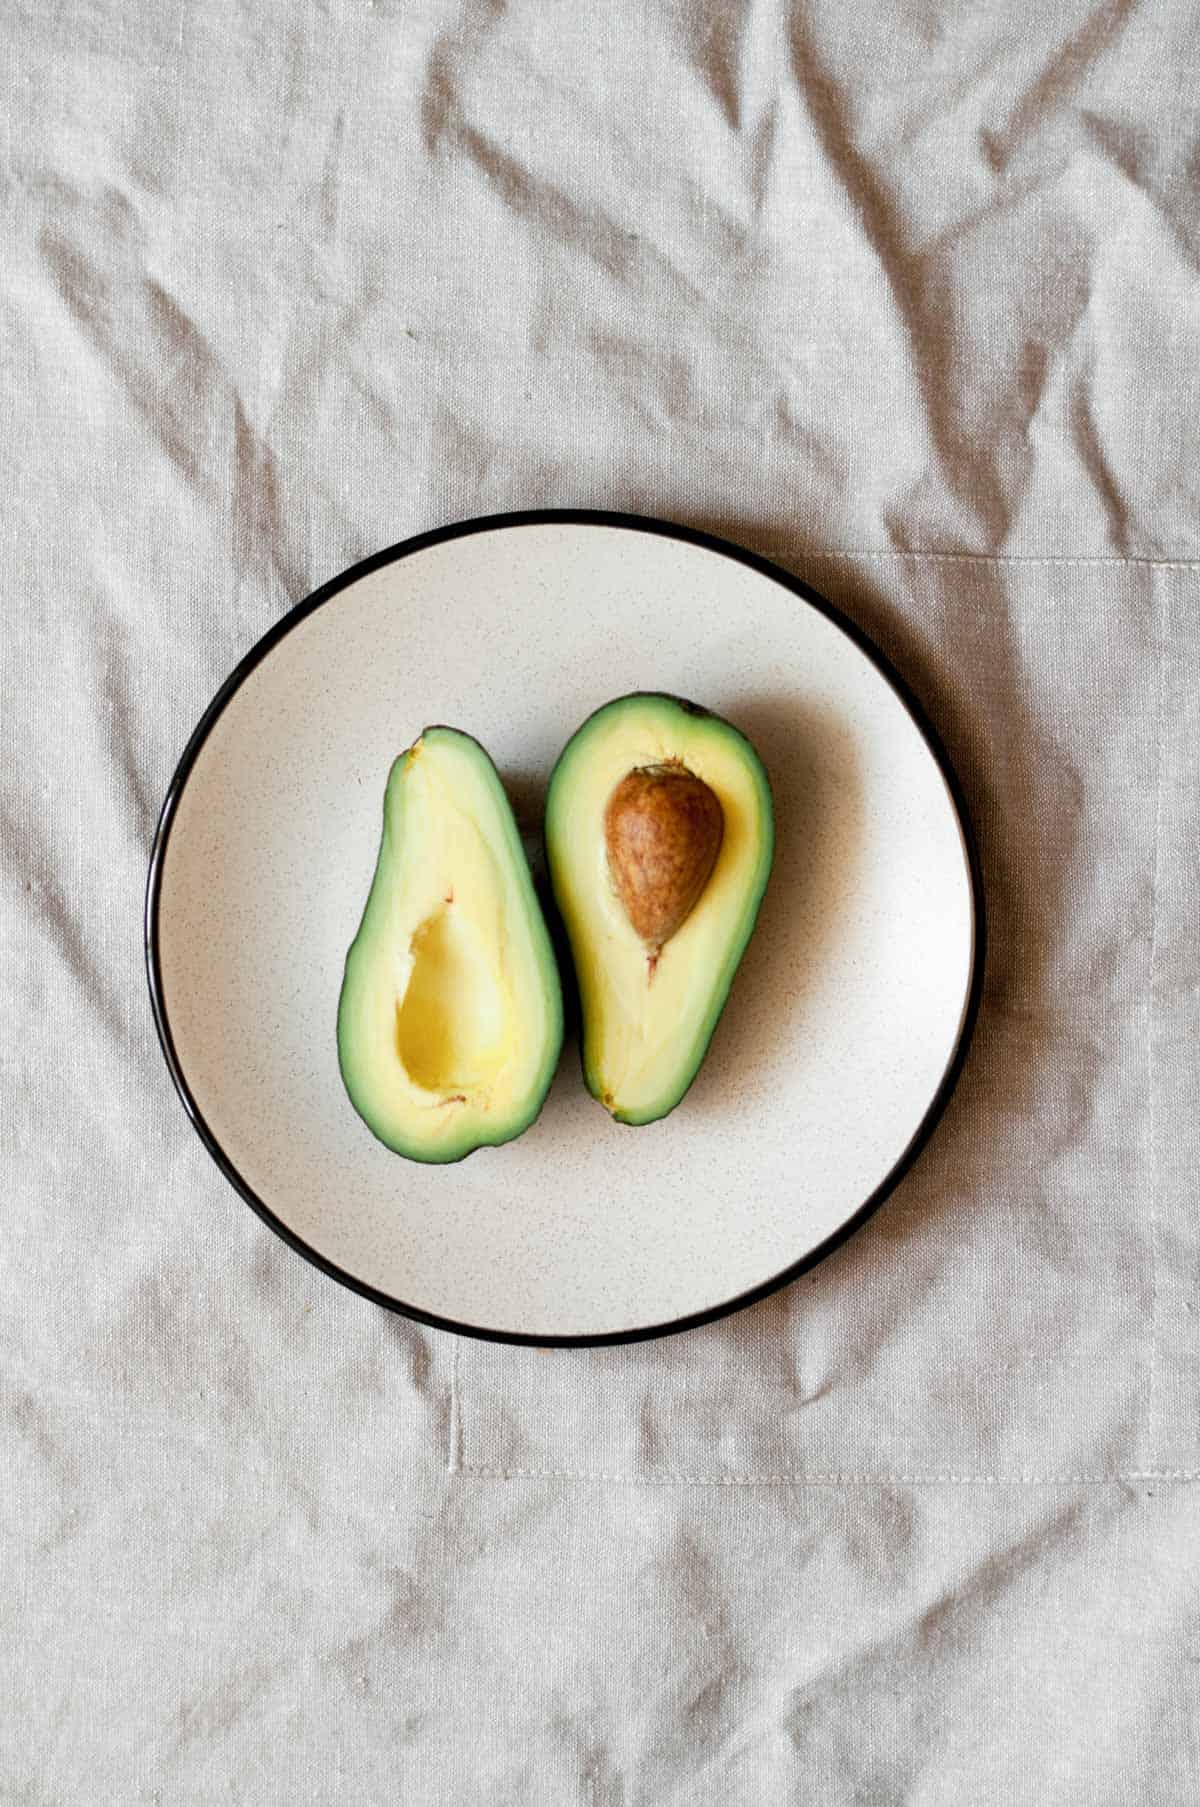 avocados are a delicious + nutritious ingredient